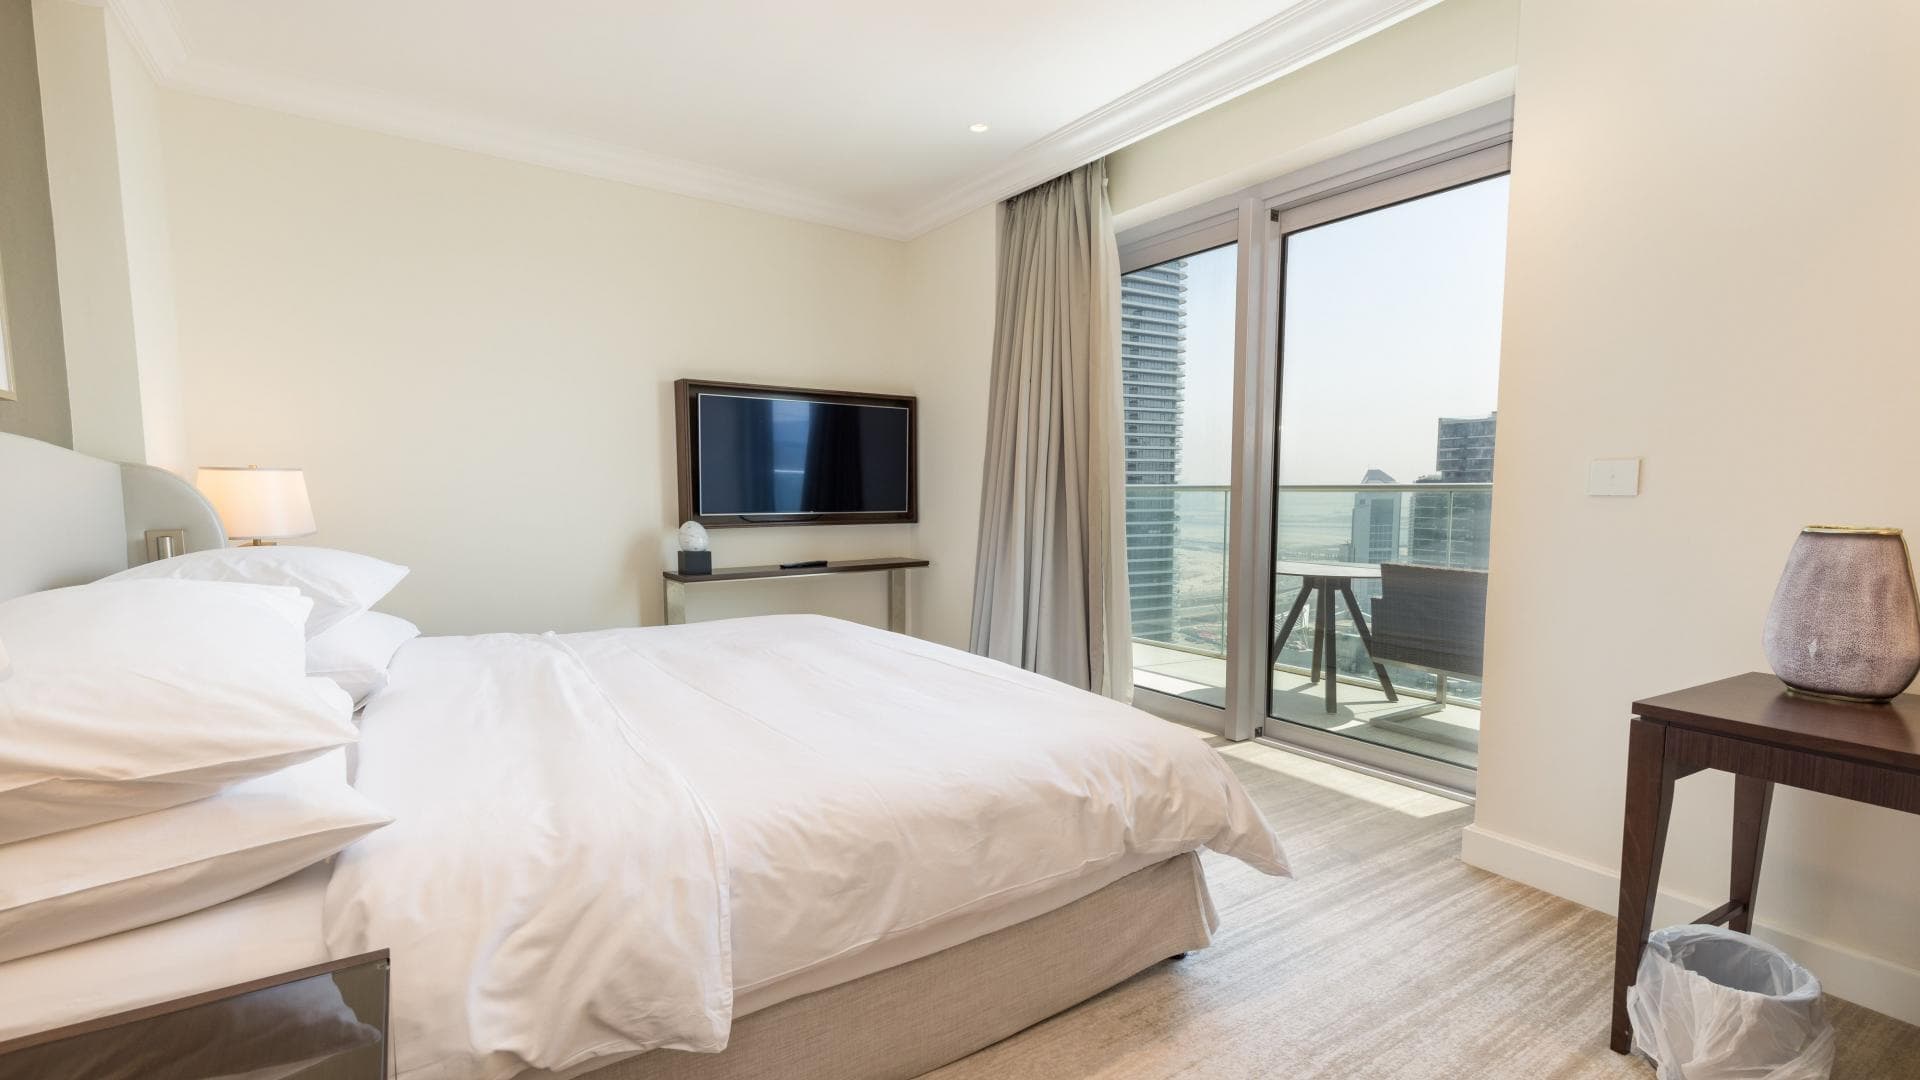 2 Bedroom Apartment For Rent Marina View Tower B Lp37595 2ea5ff249aebdc00.jpeg